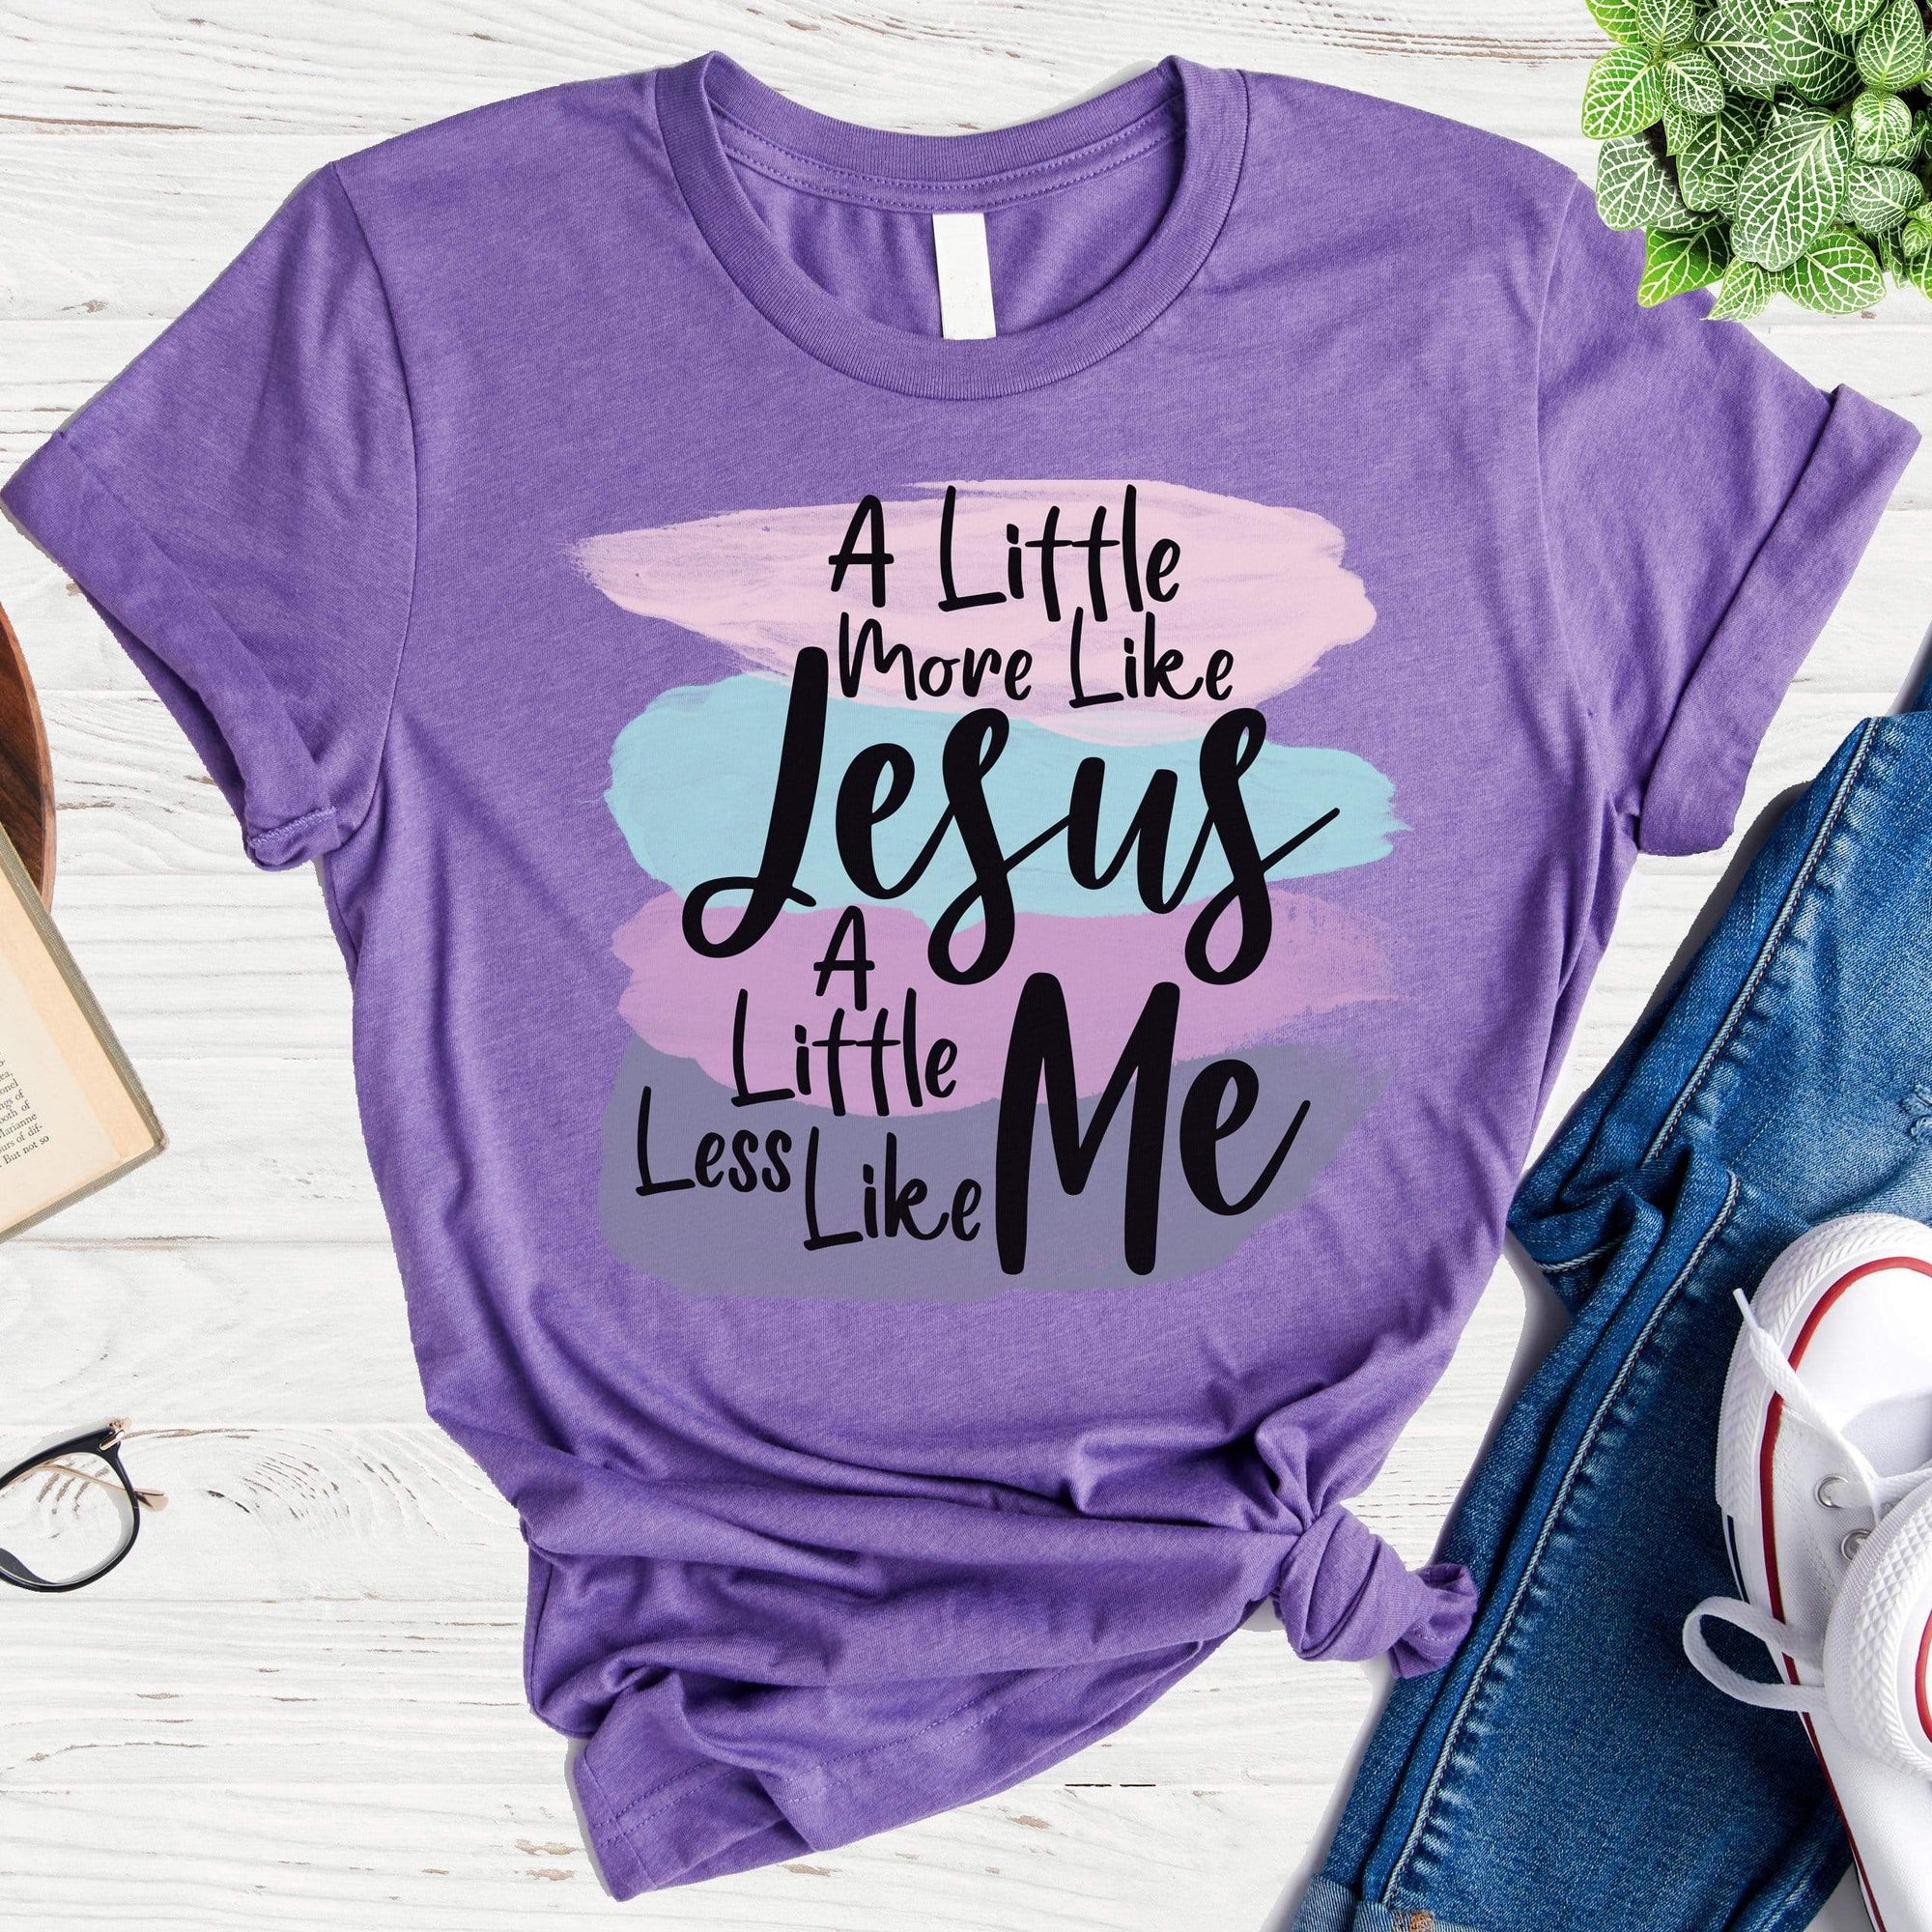 More Like Jesus T-shirt